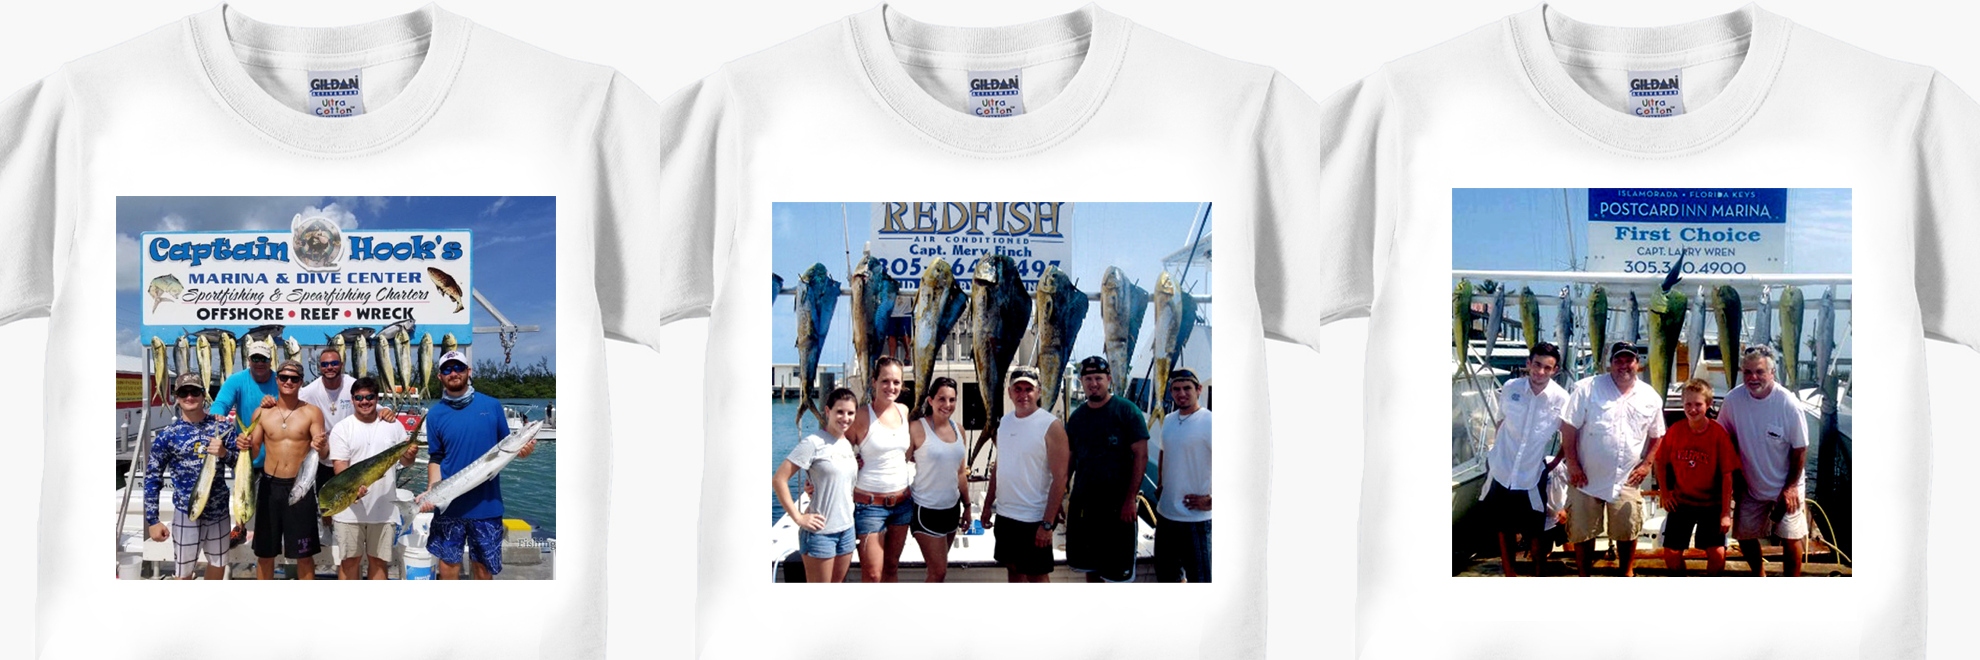 Fishing Photos On A T-Shirt